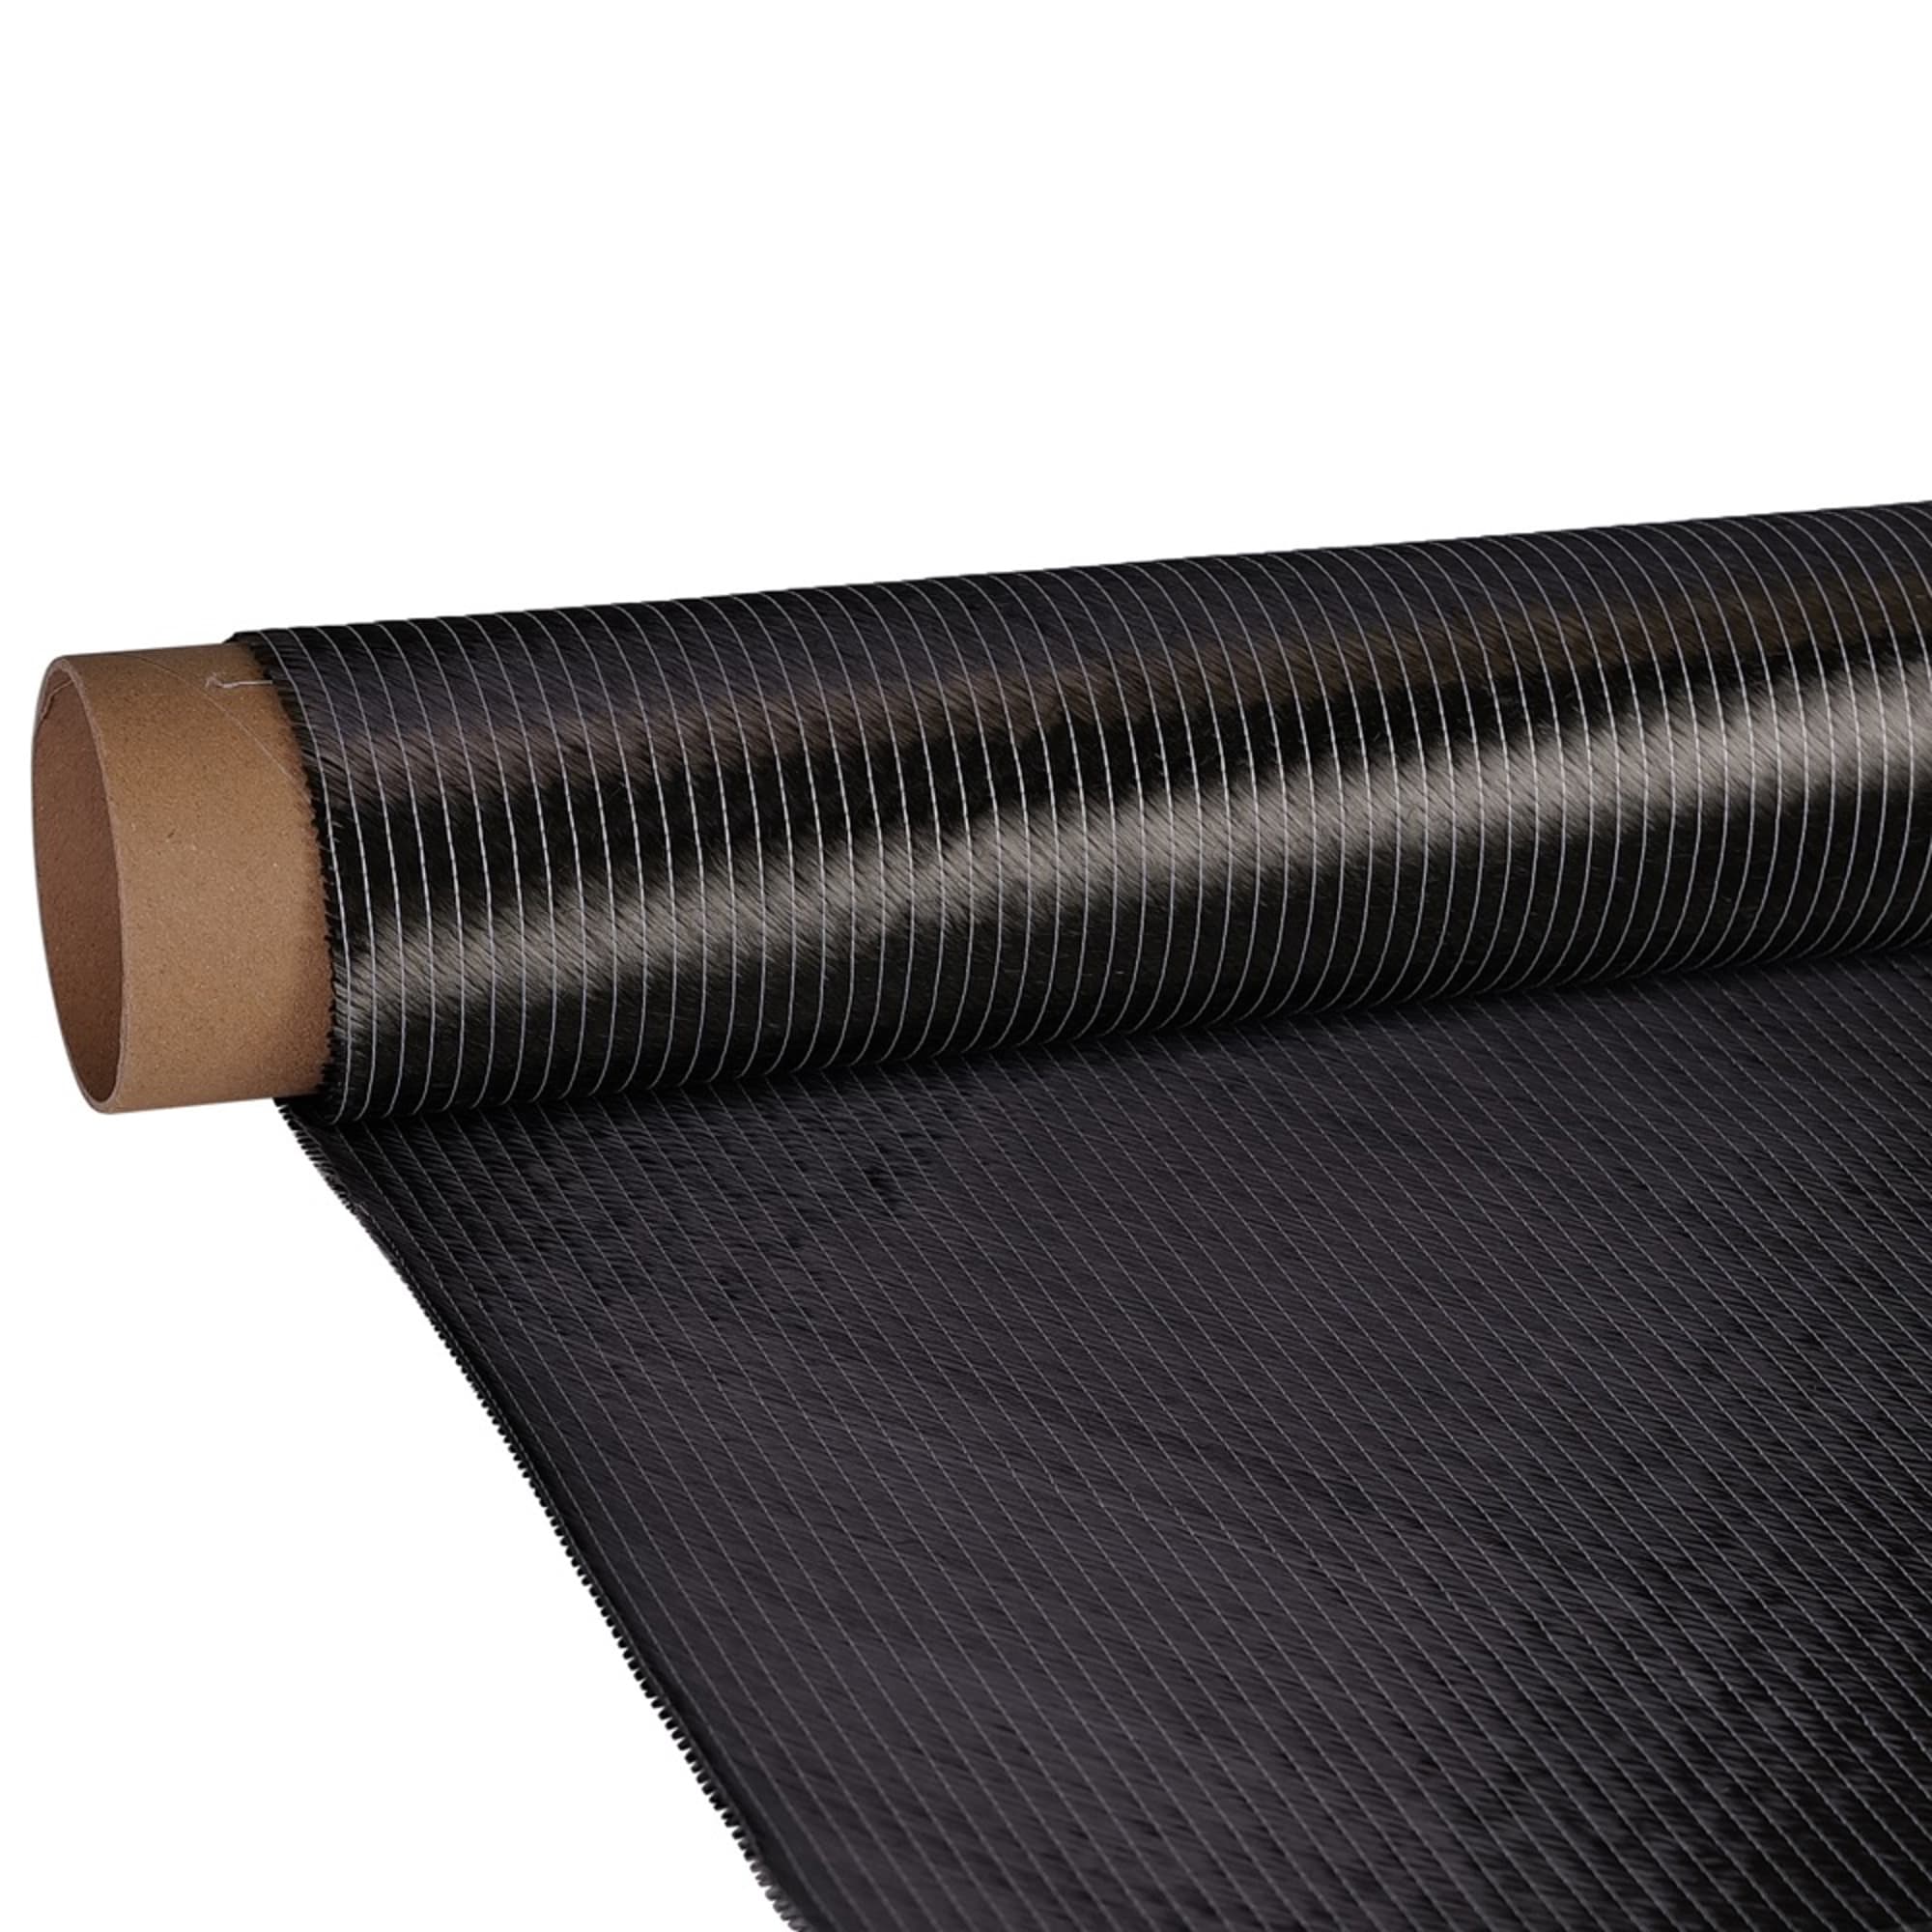 SIGRATEX® Carbon non-crimp fabric 310 g/m² (biaxial) 127 cm, image 6